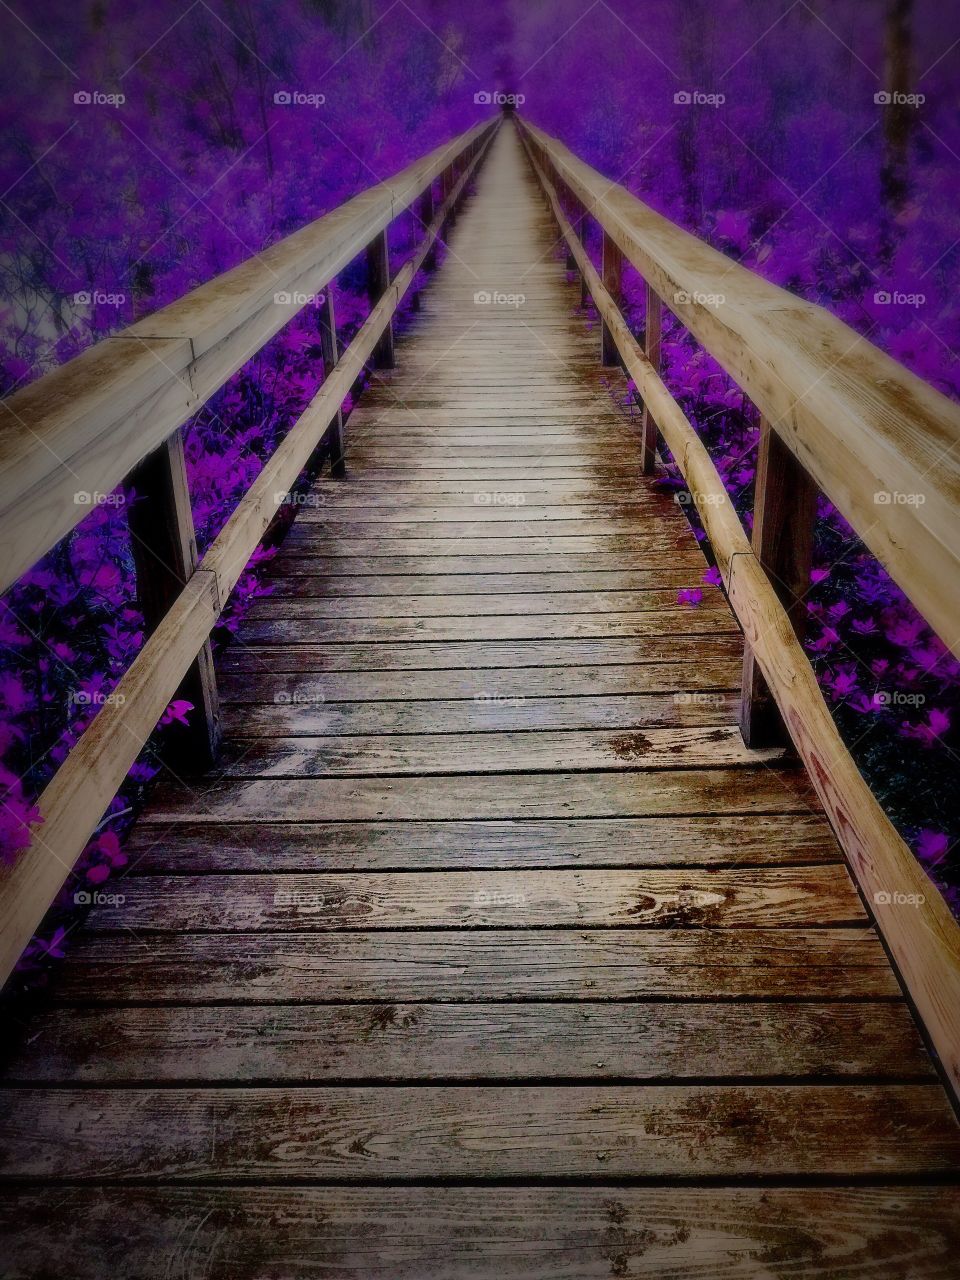 Purple Path . Boardwalk leading to infinite possibilities!